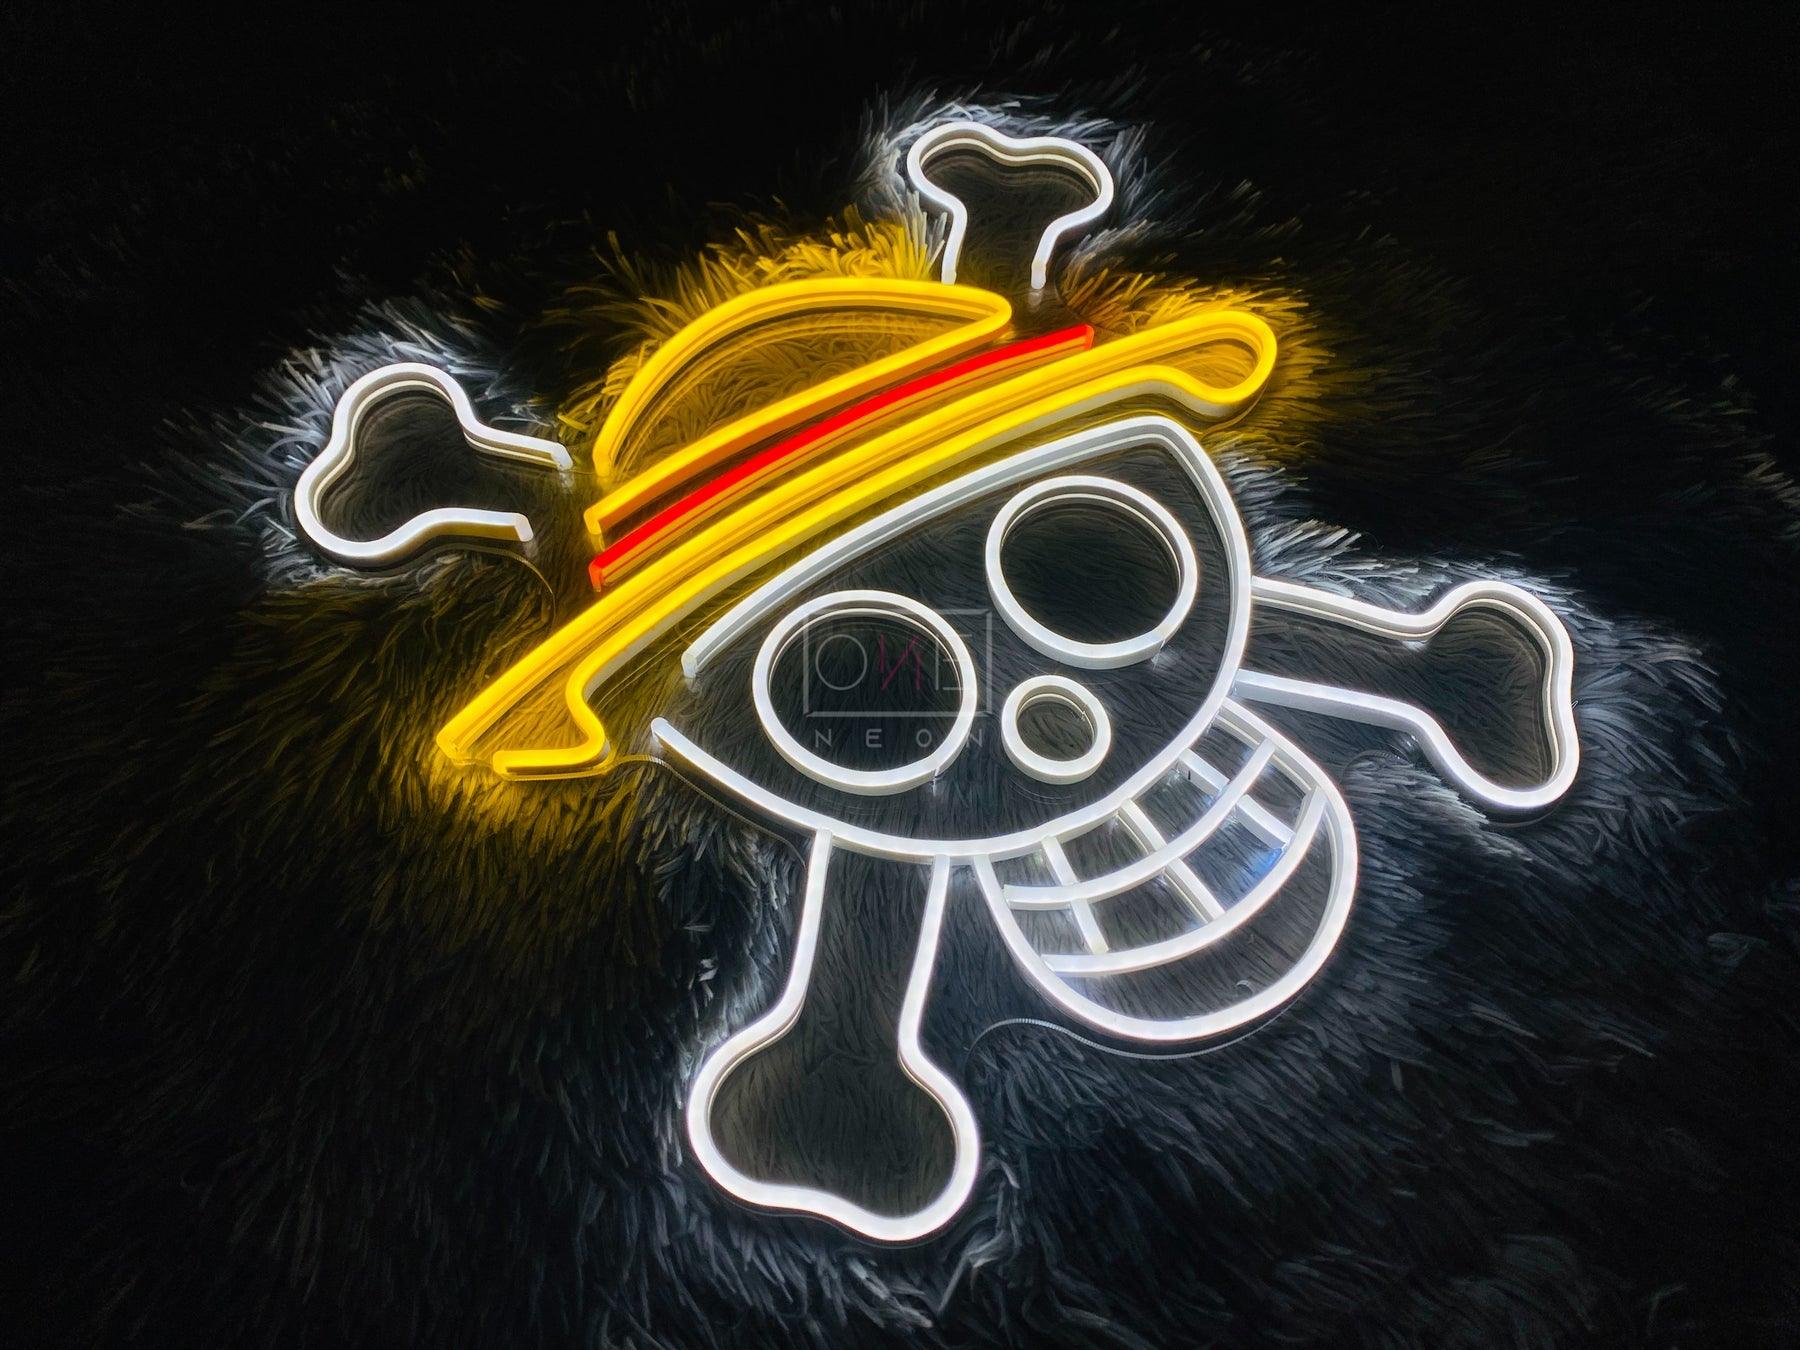 One Piece Skull Neon Sign